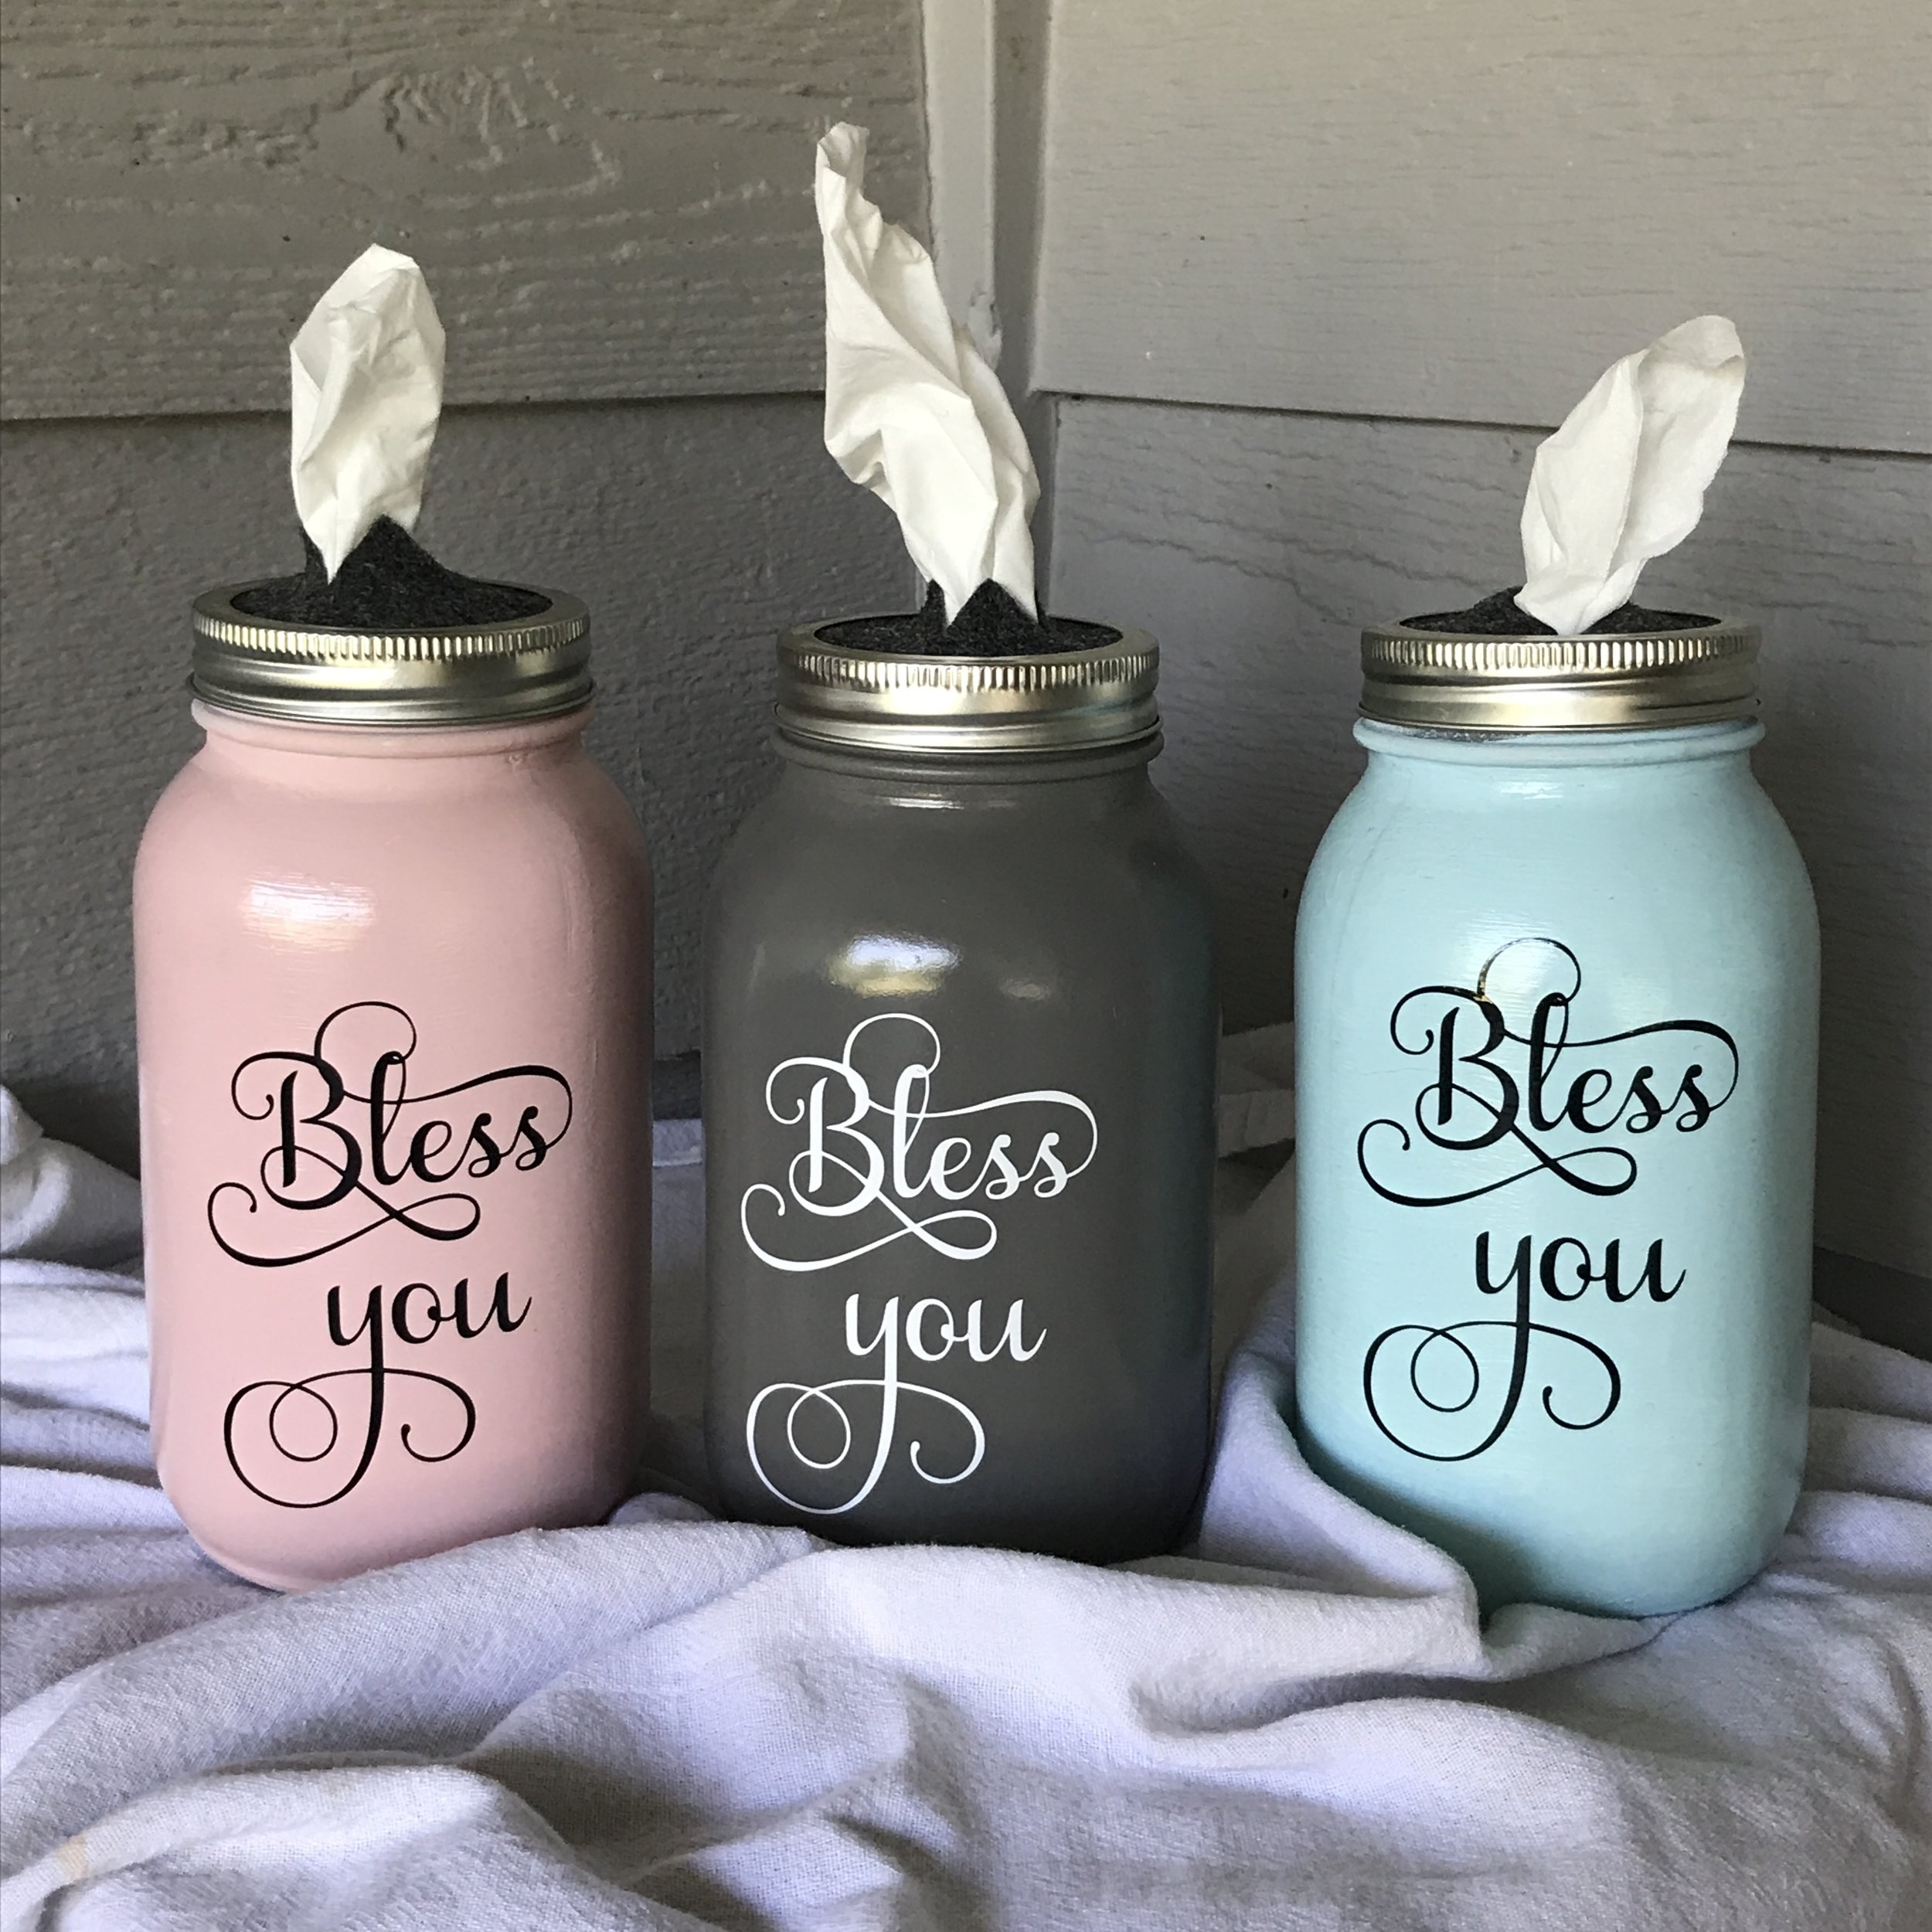 Mason jar tissues jars with tissues 